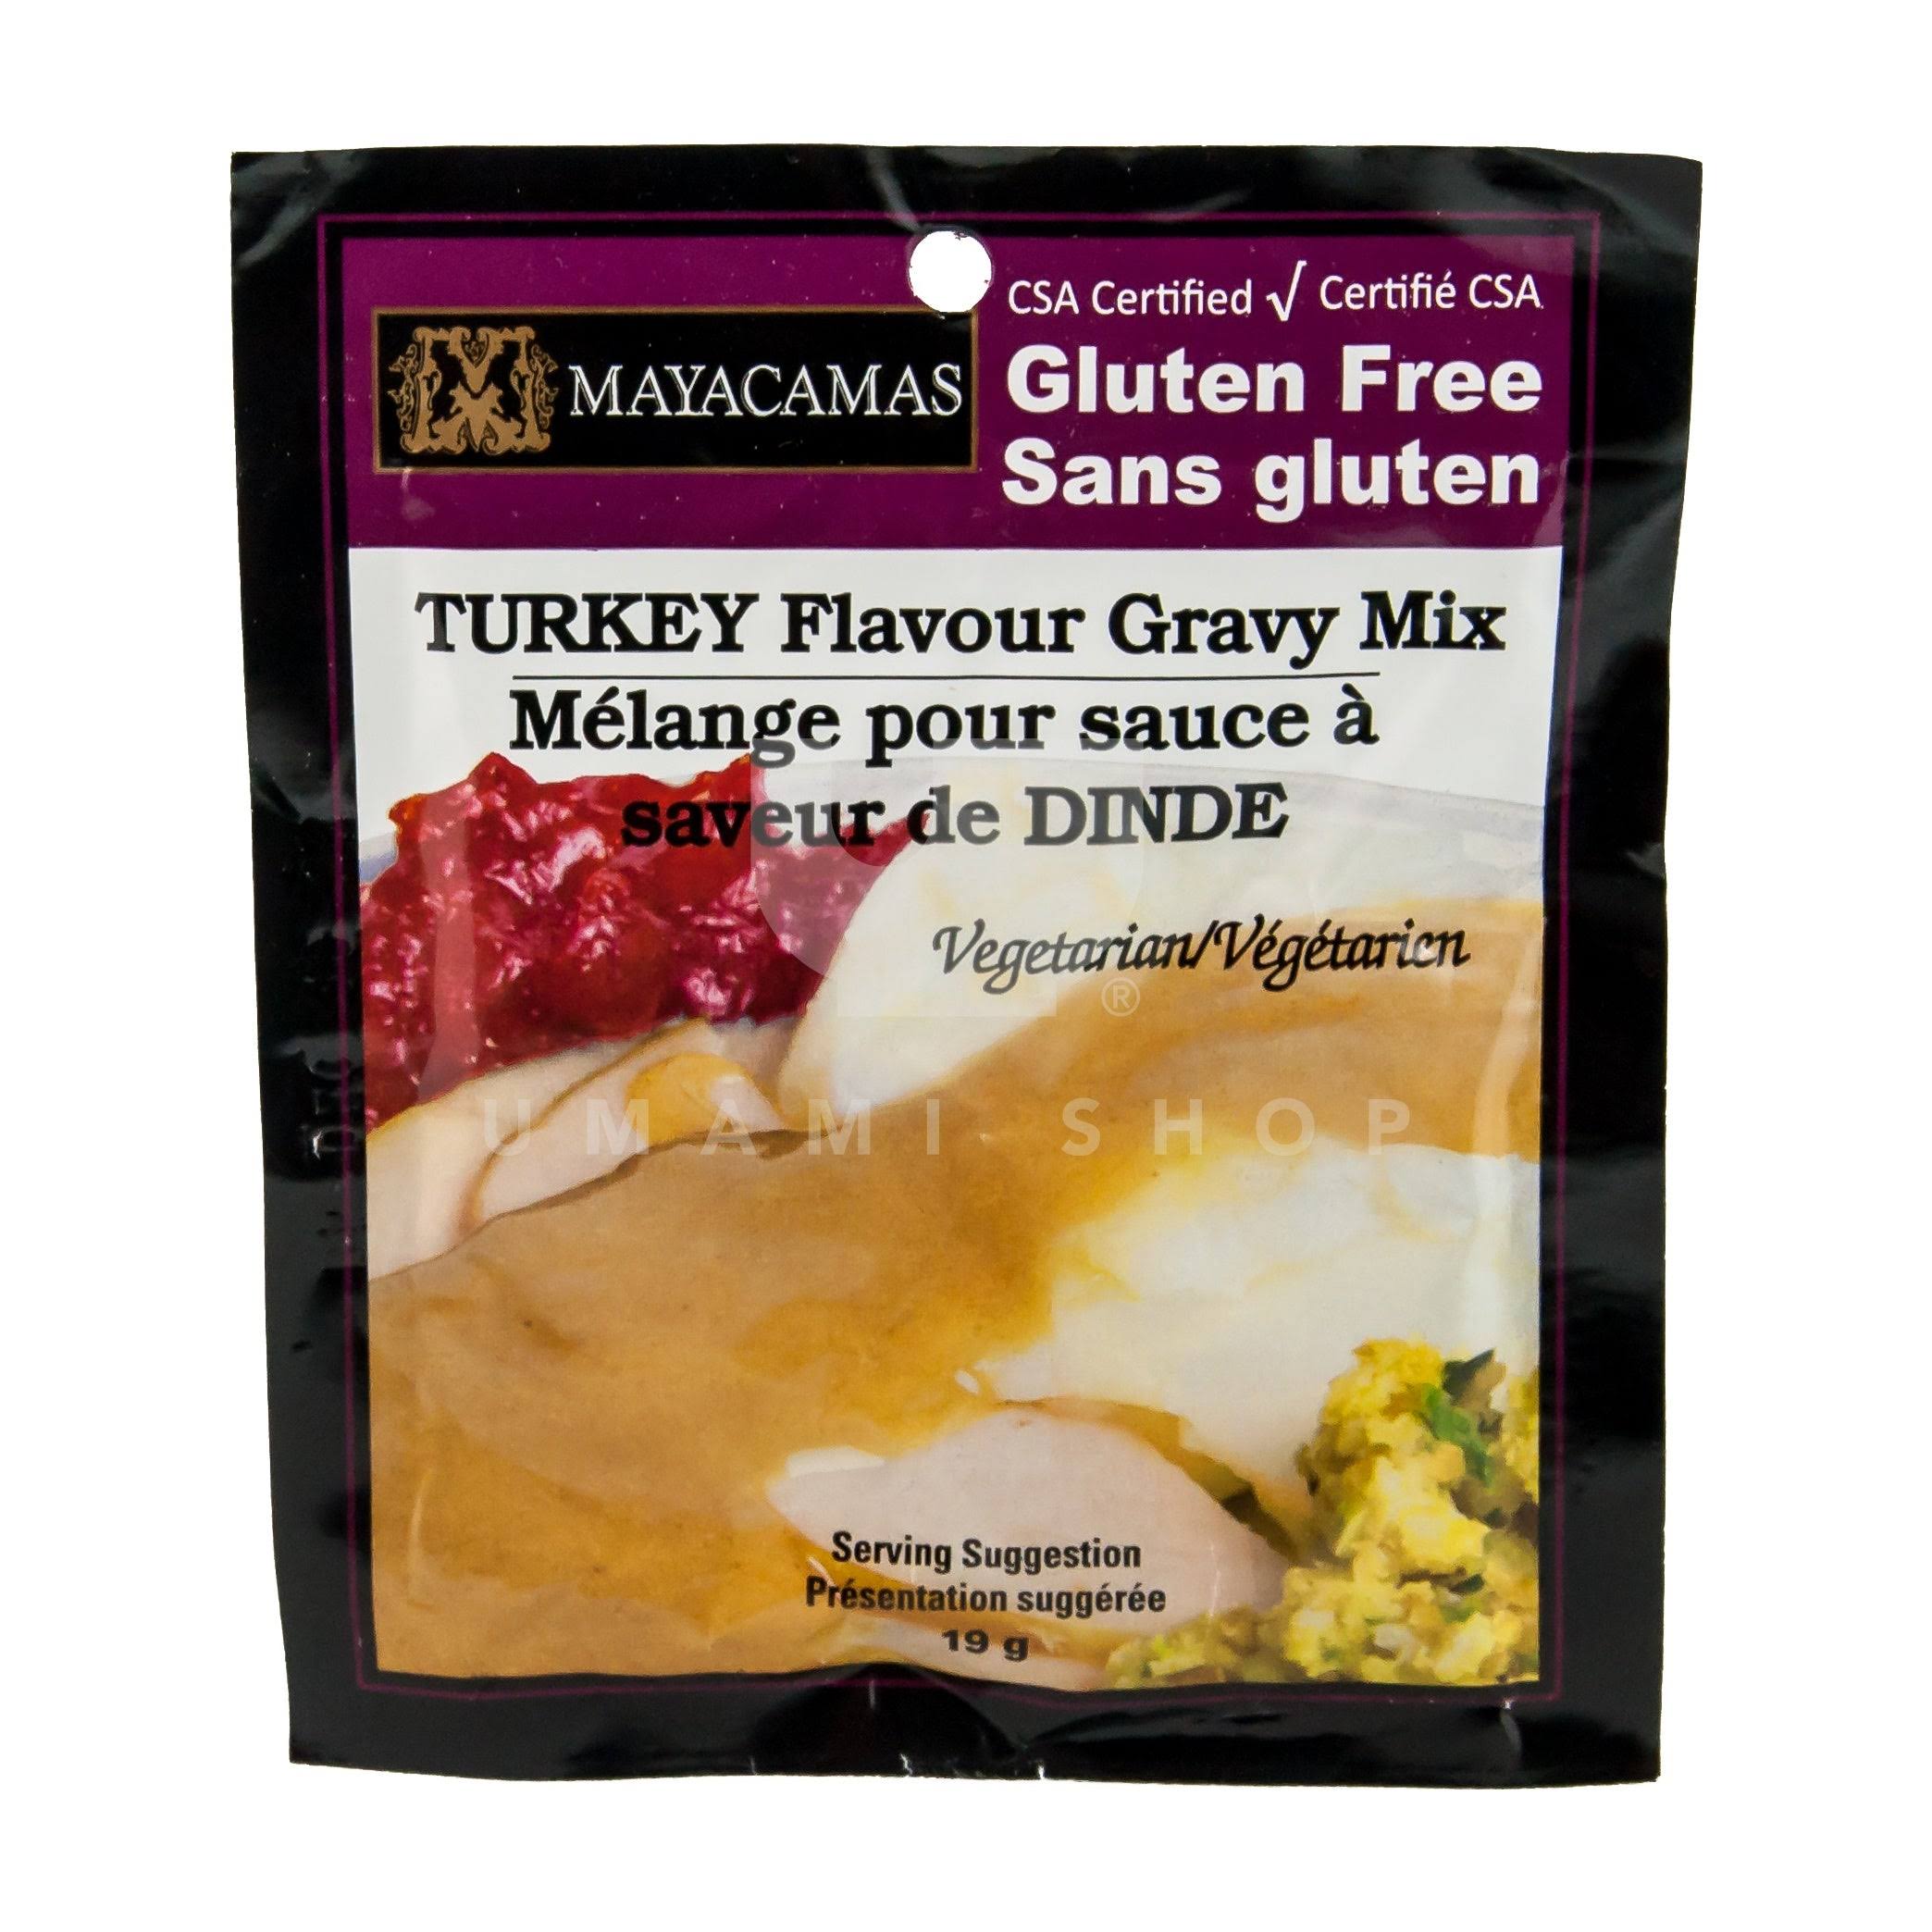 Mayacamas Vegetarian Turkey Flavored Gravy Mix - 0.70oz